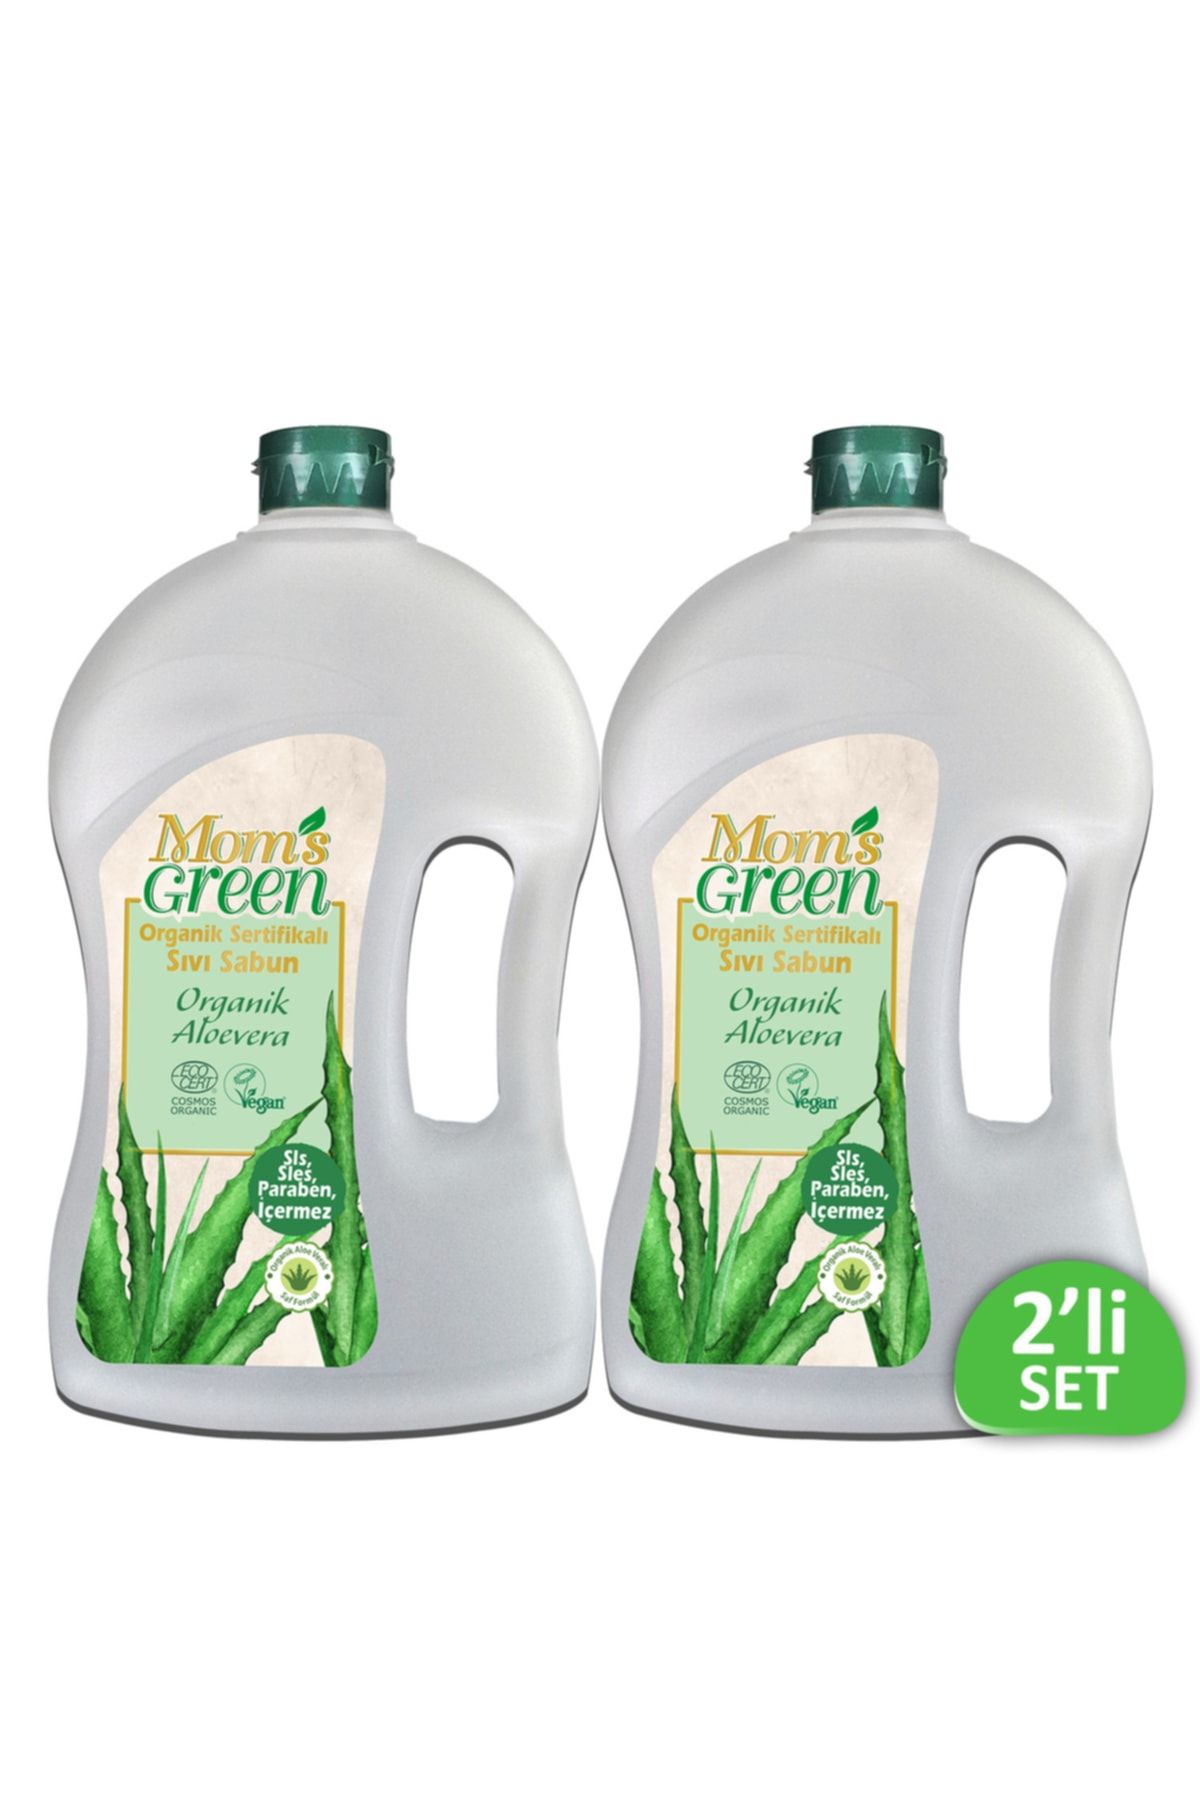 Mom's Green 2'li Set Organik Sertifikalı Sıvı Sabun - Organik Aloeveralı 1500 ml *2 Adet